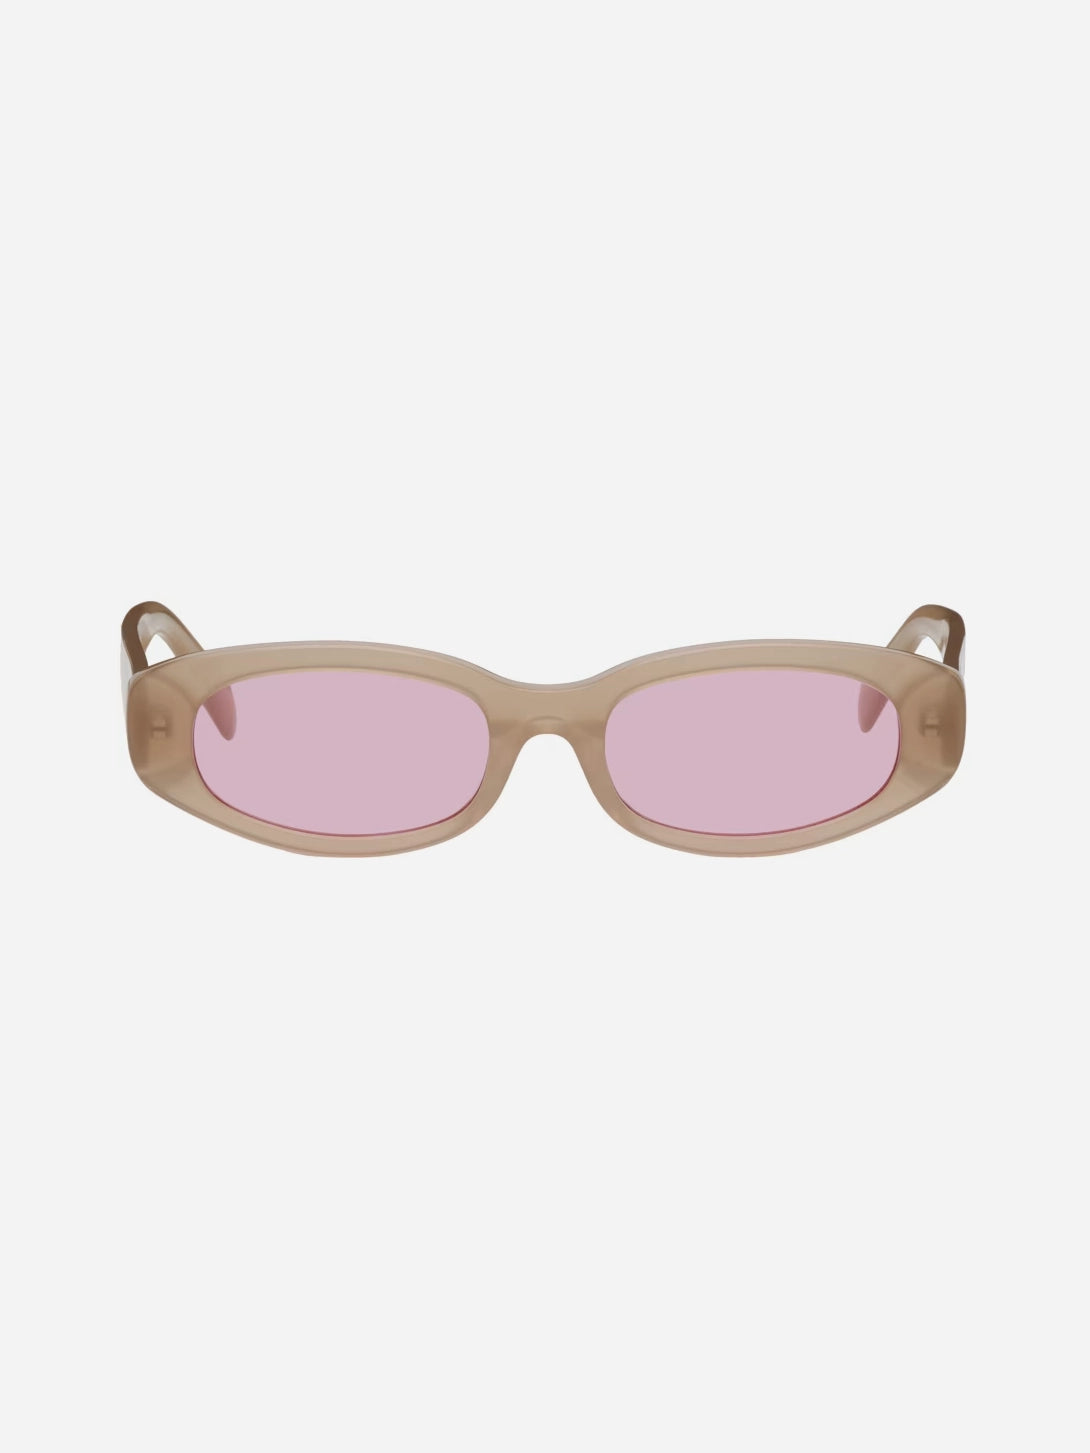 Milky Brown/Pink Tint Bonnie Clyde Plum Plum Sunglasses